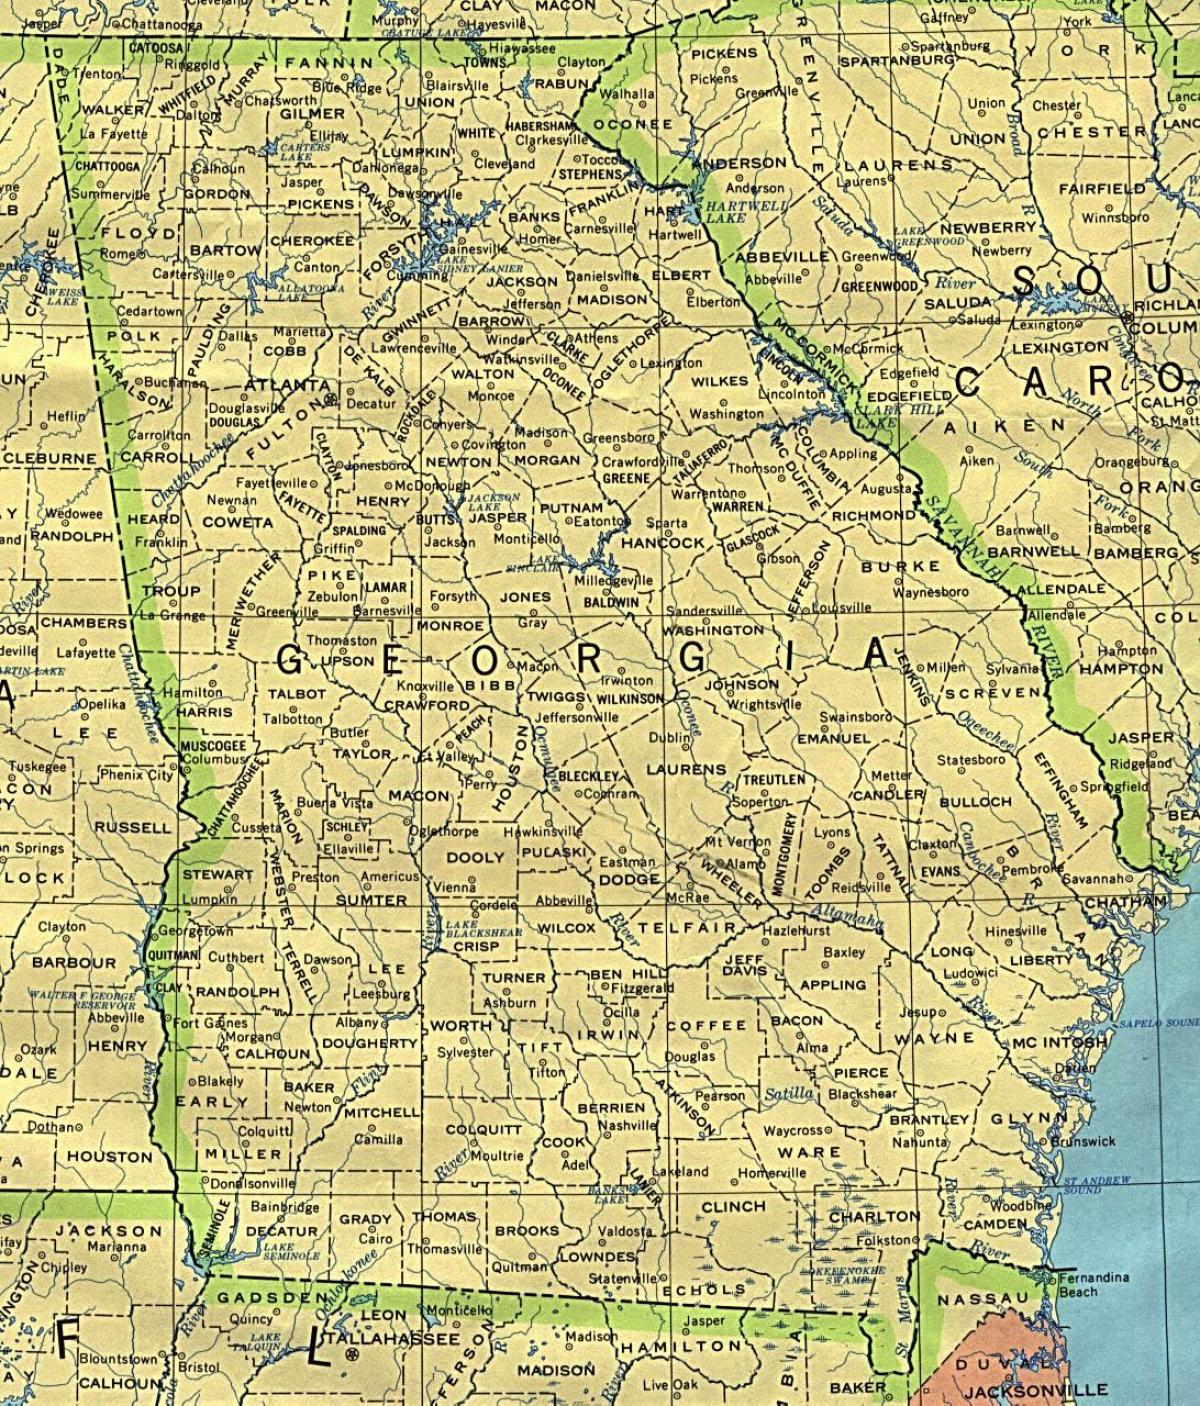 kort over Georgien byer